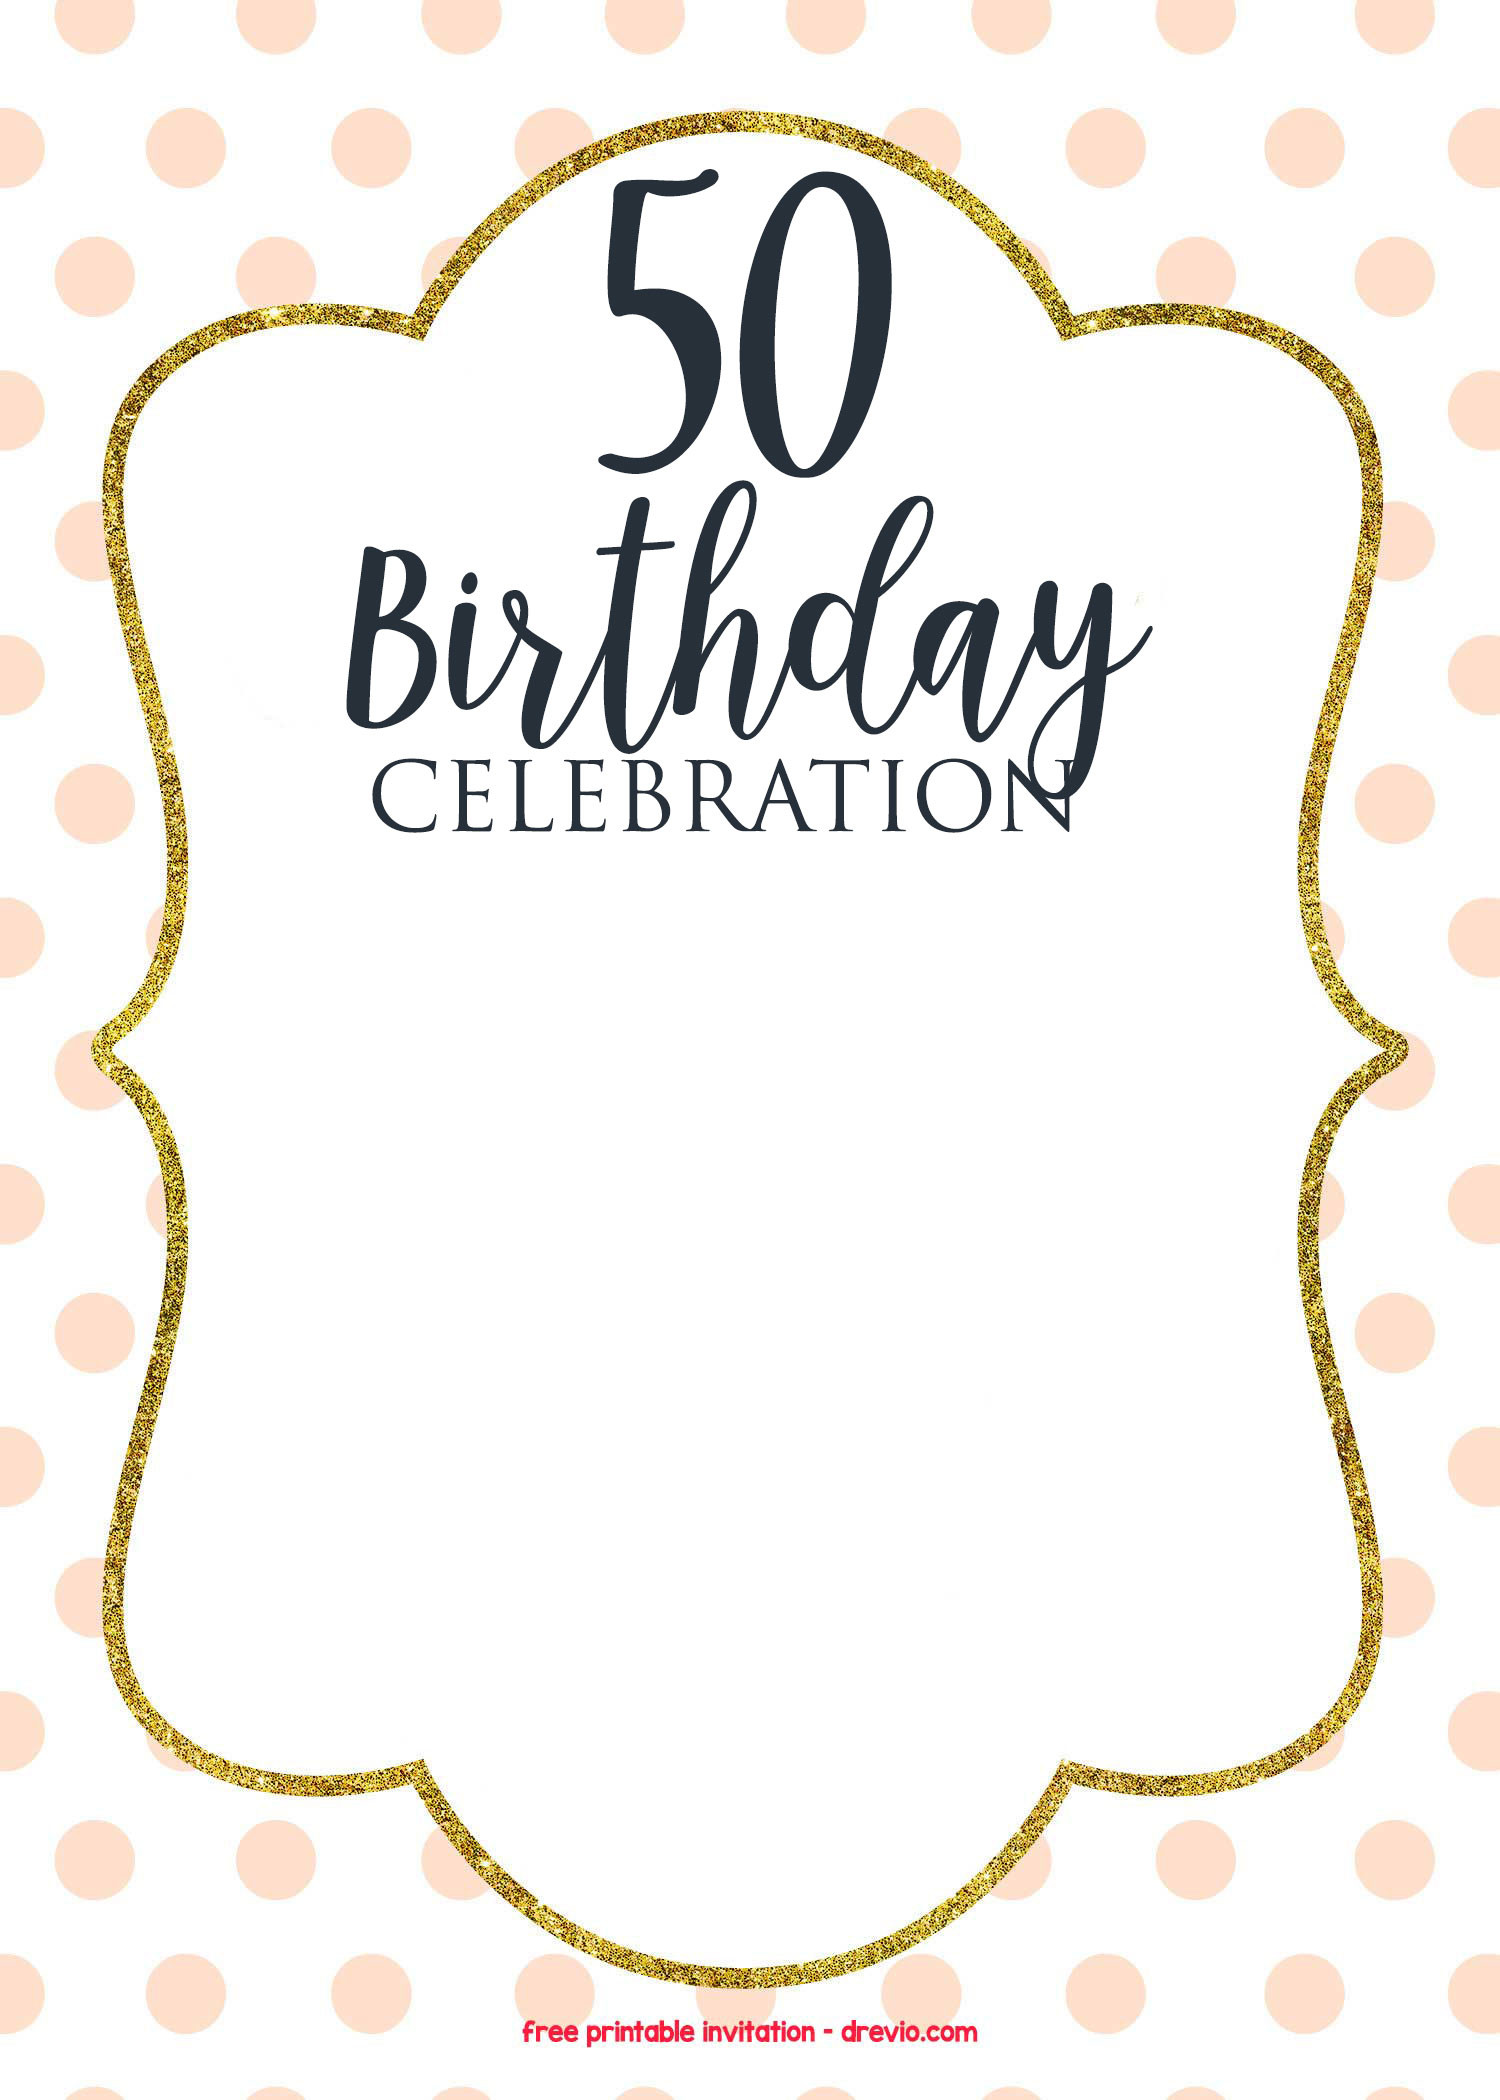 50th Birthday Invitation Templates Free Printable
 50th Birthday Invitations line – FREE PRINTABLE Birthday